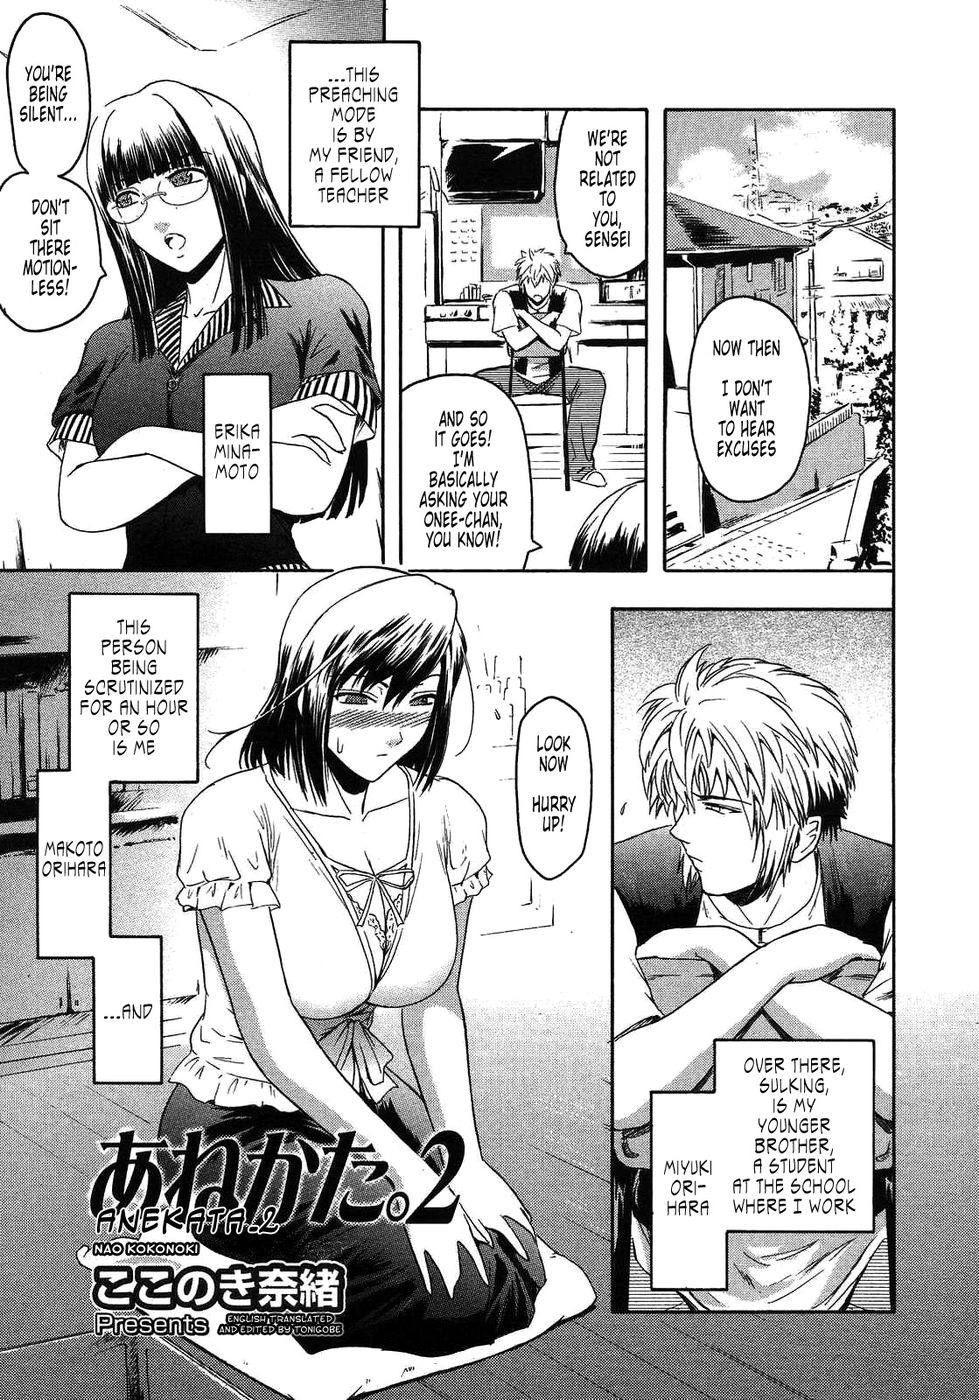 Hentai Manga Comic-Second Virgin-Chapter 2 - anekata 2-1